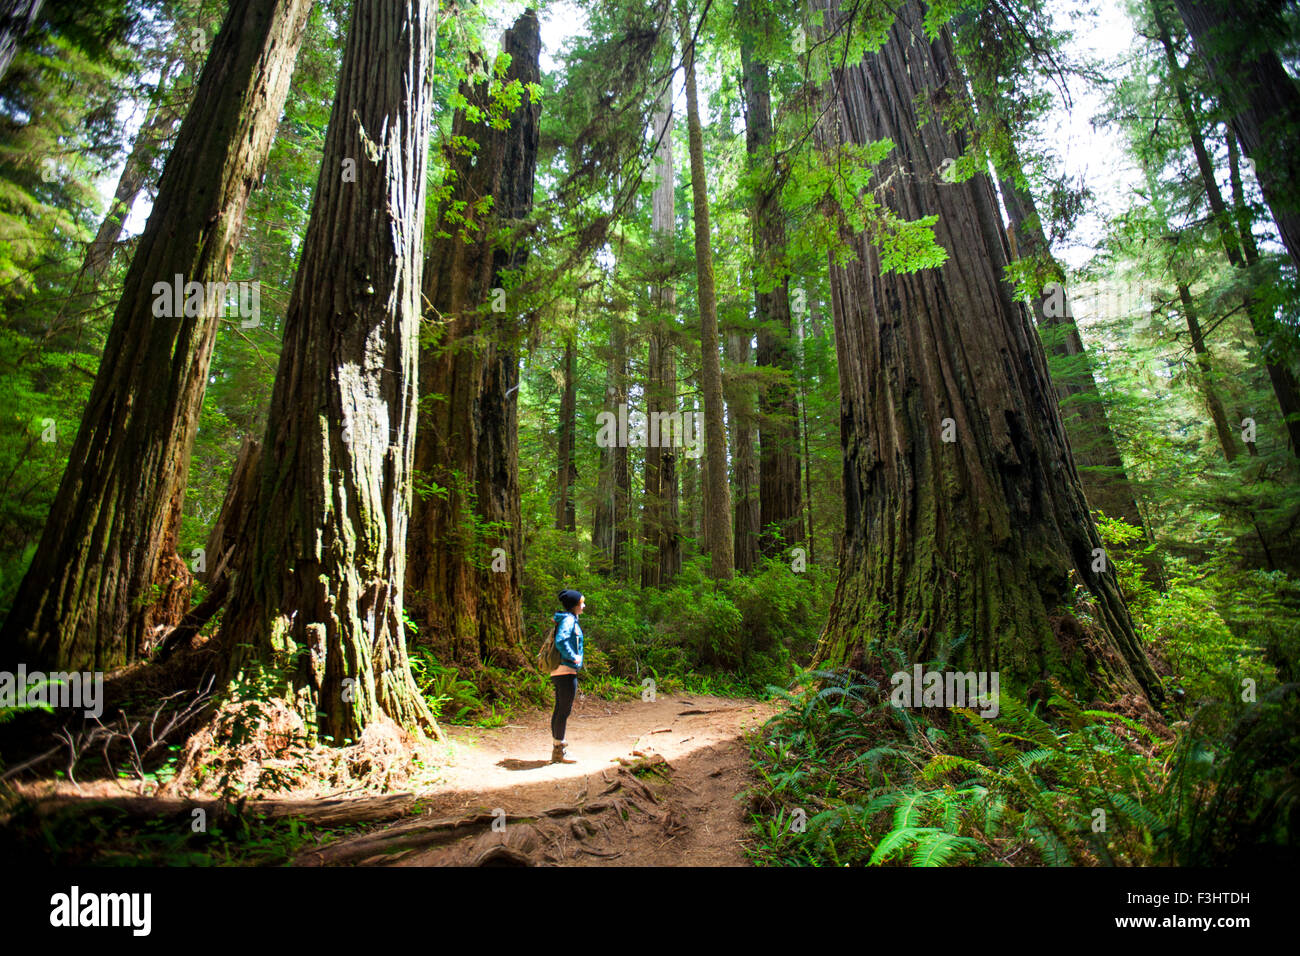 Un excursionista está entre gigantescos árboles mientras visitaba la Stout Grove, Jedediah Smith Redwoods State Park. Foto de stock